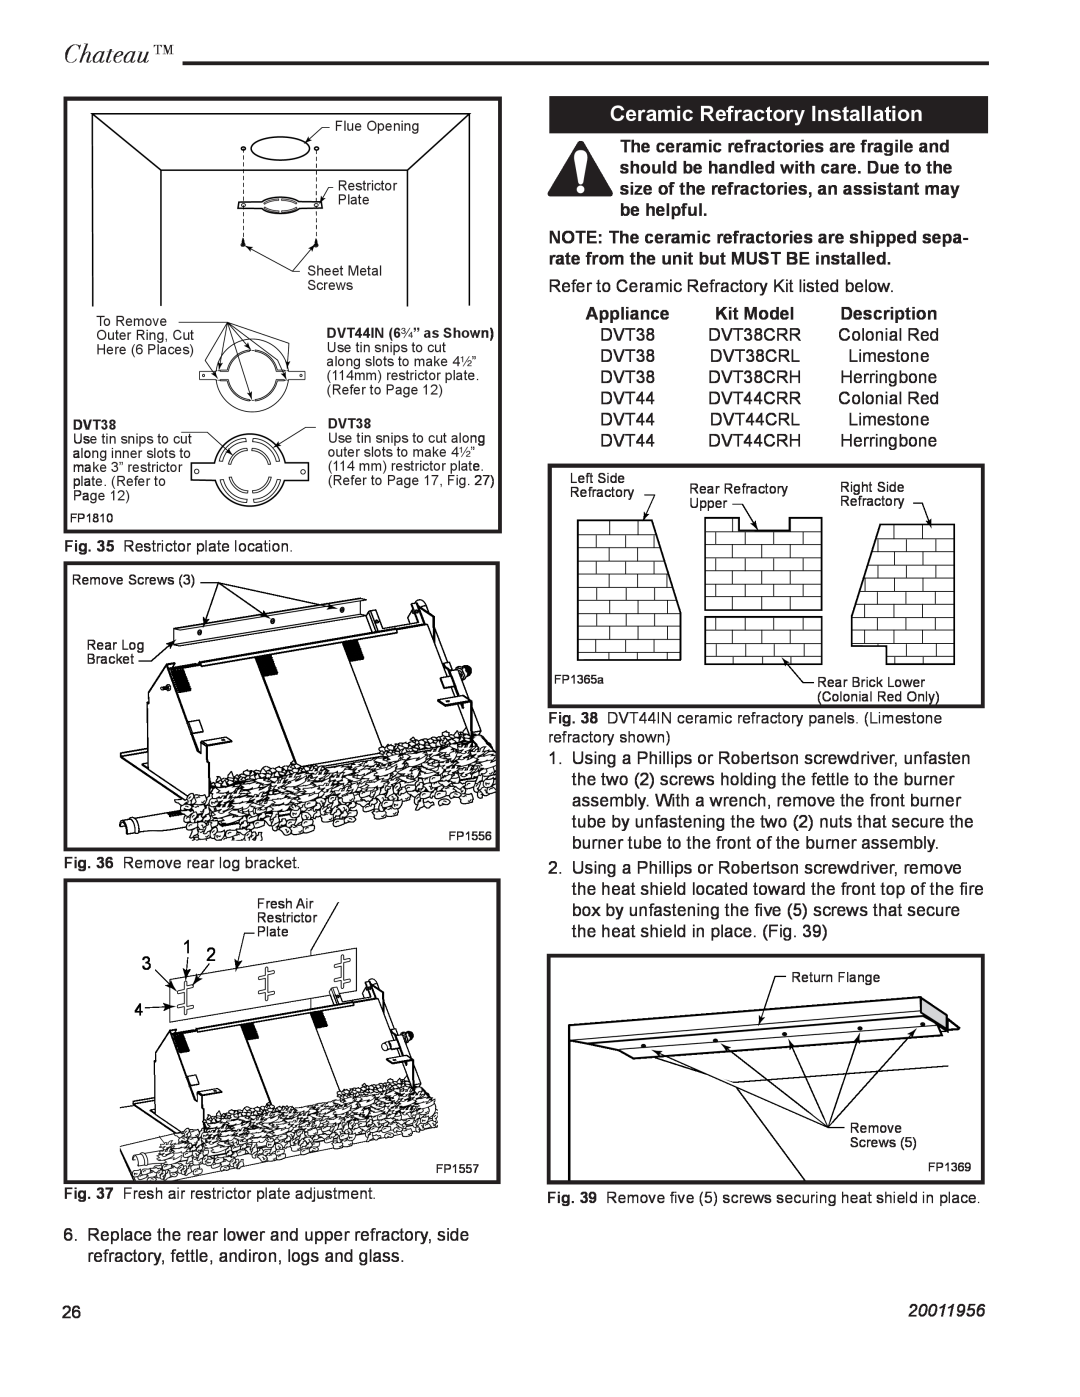 CFM Corporation DVT44IN, DVT38IN Ceramic Refractory Installation, Chateau, Appliance, Kit Model, Description, 20011956 